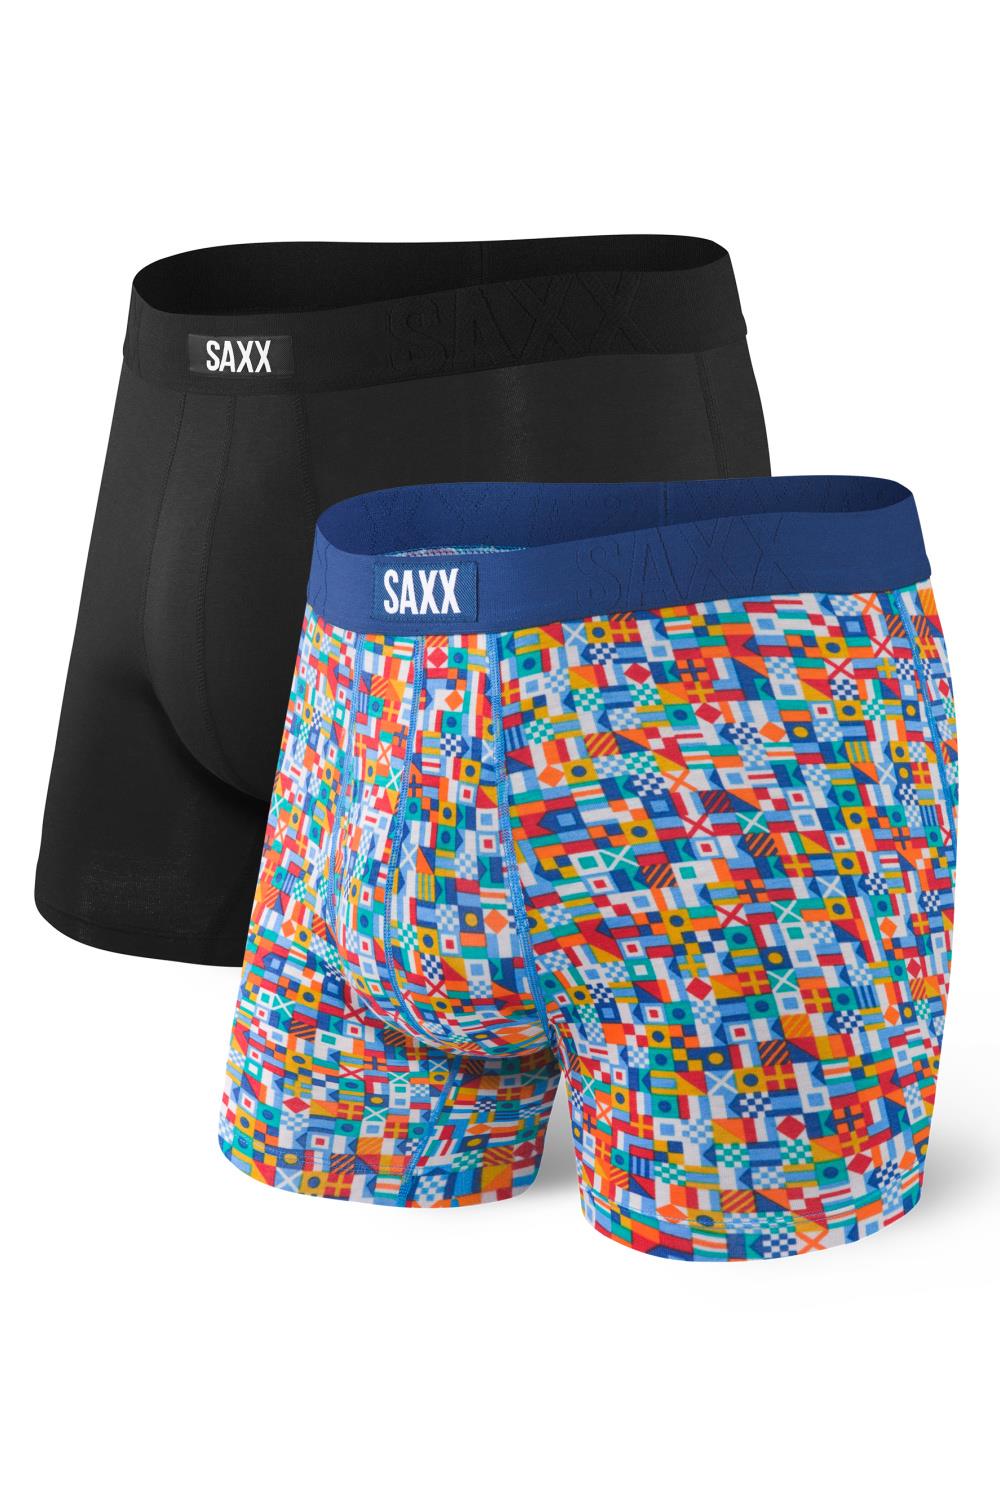 SAXX Undercover Boxer Brief 2 Pack (Black/Black)